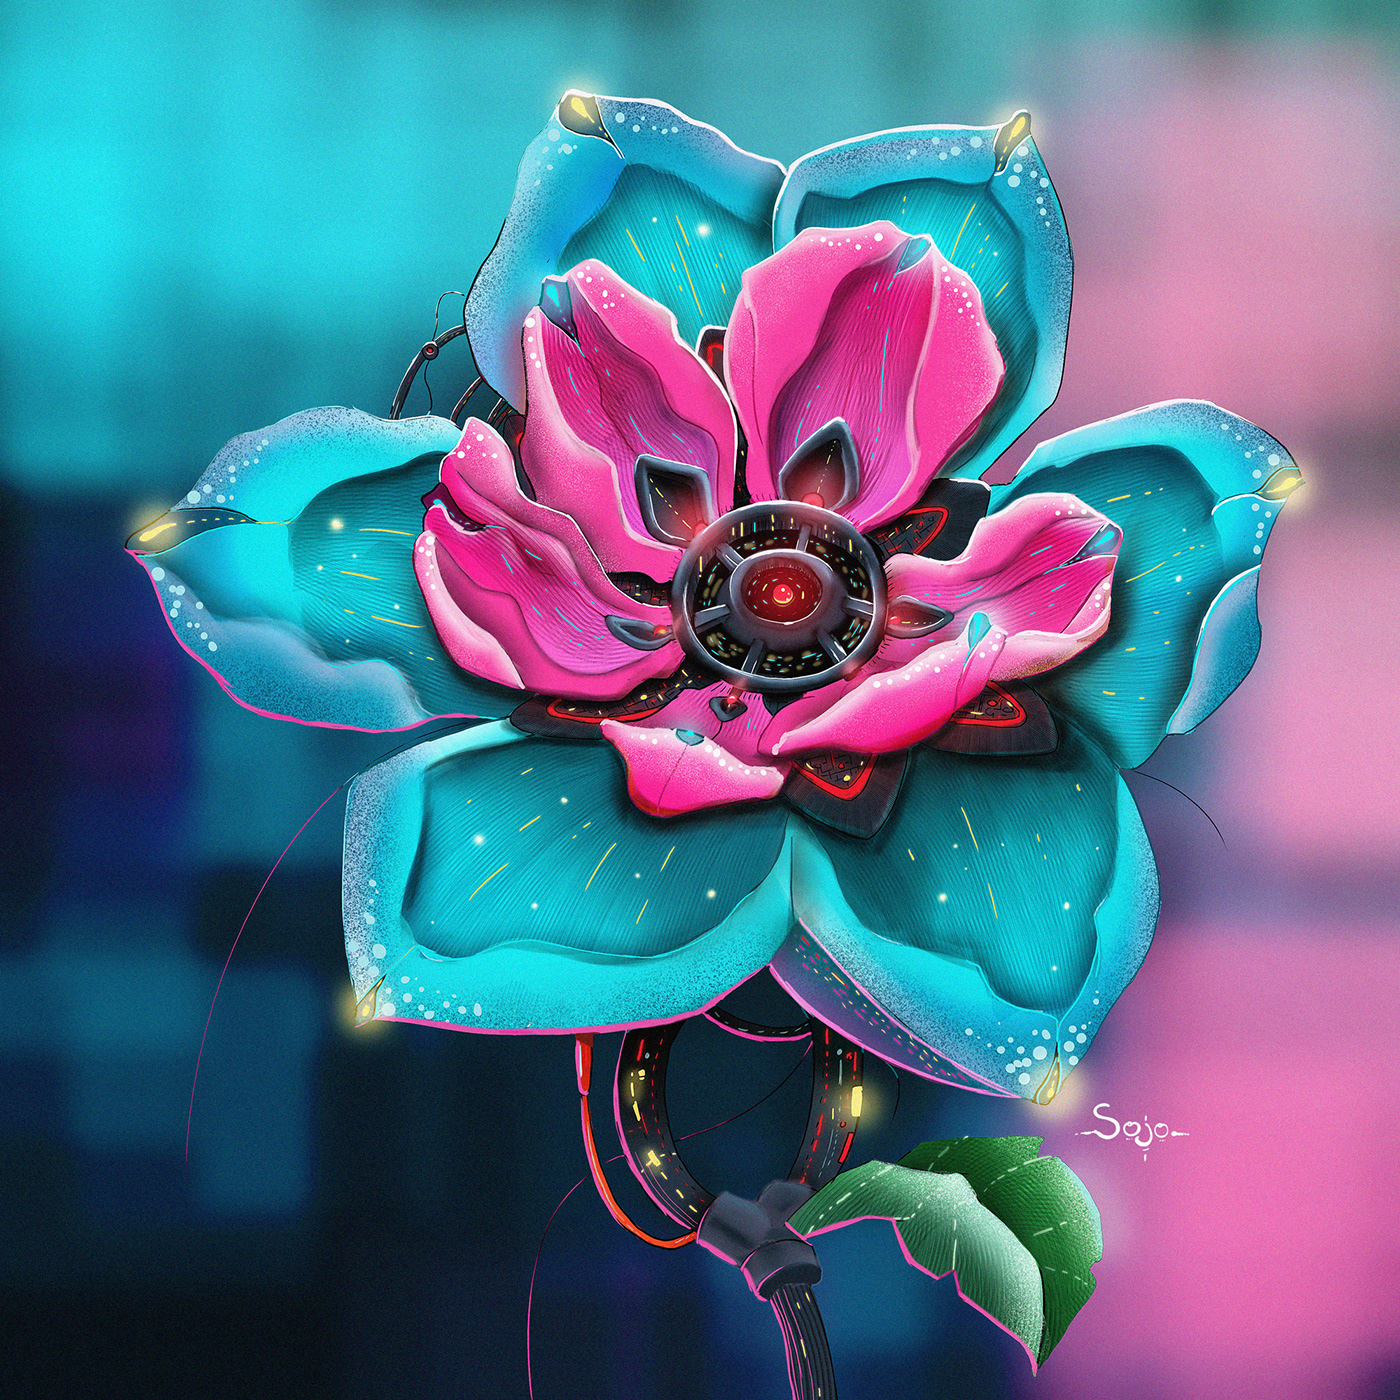 cyber digitalpainting digitalart DigitalIllustration Nature flower floral Flowers painting   concept art